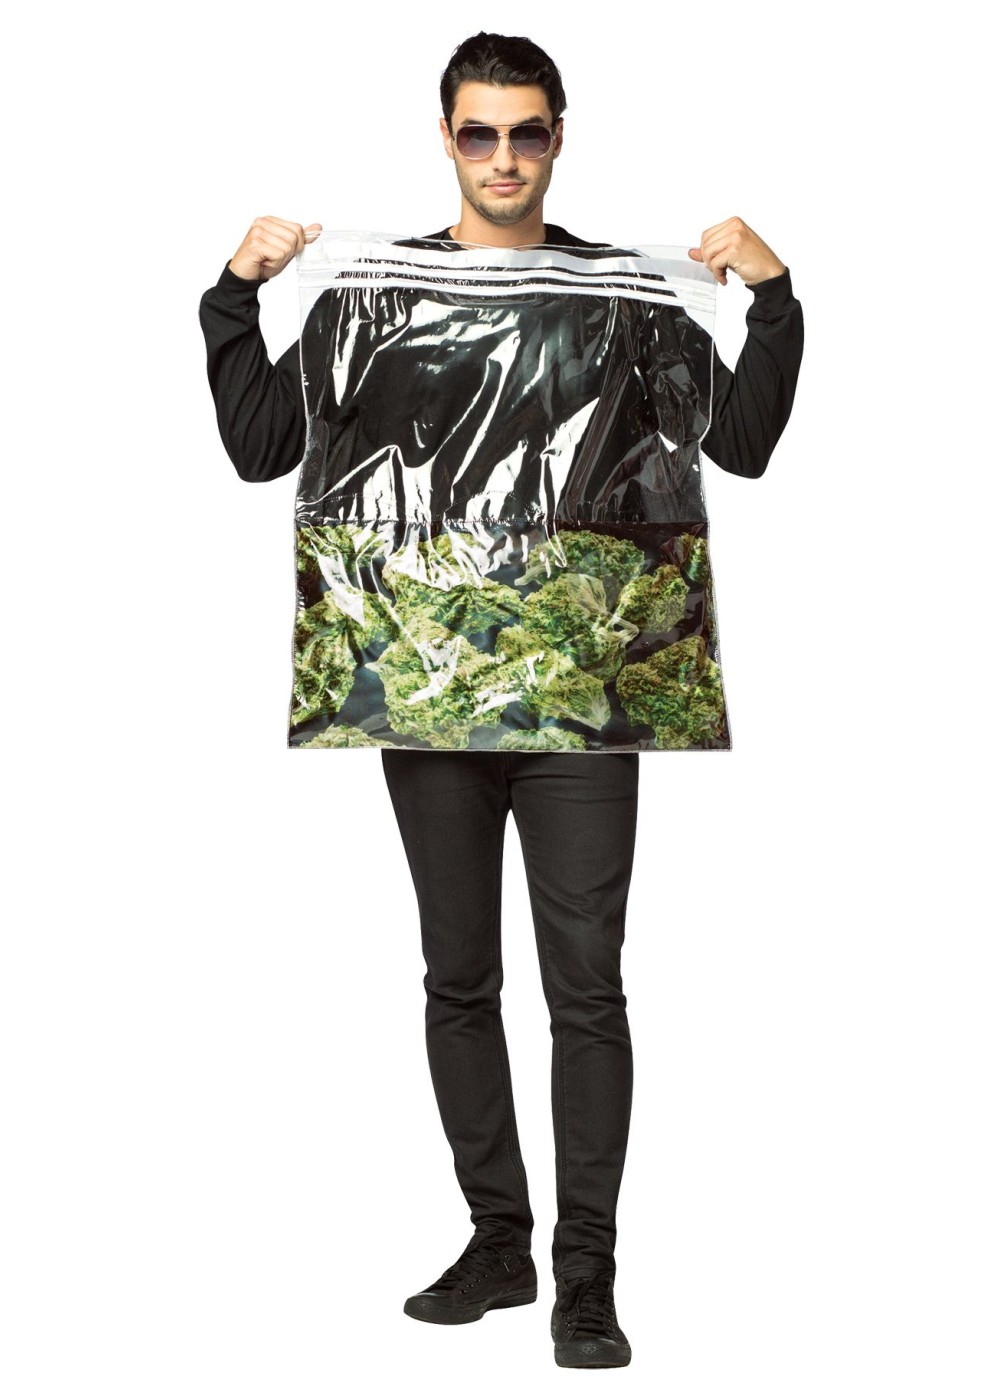 Bag Of Weed Costume